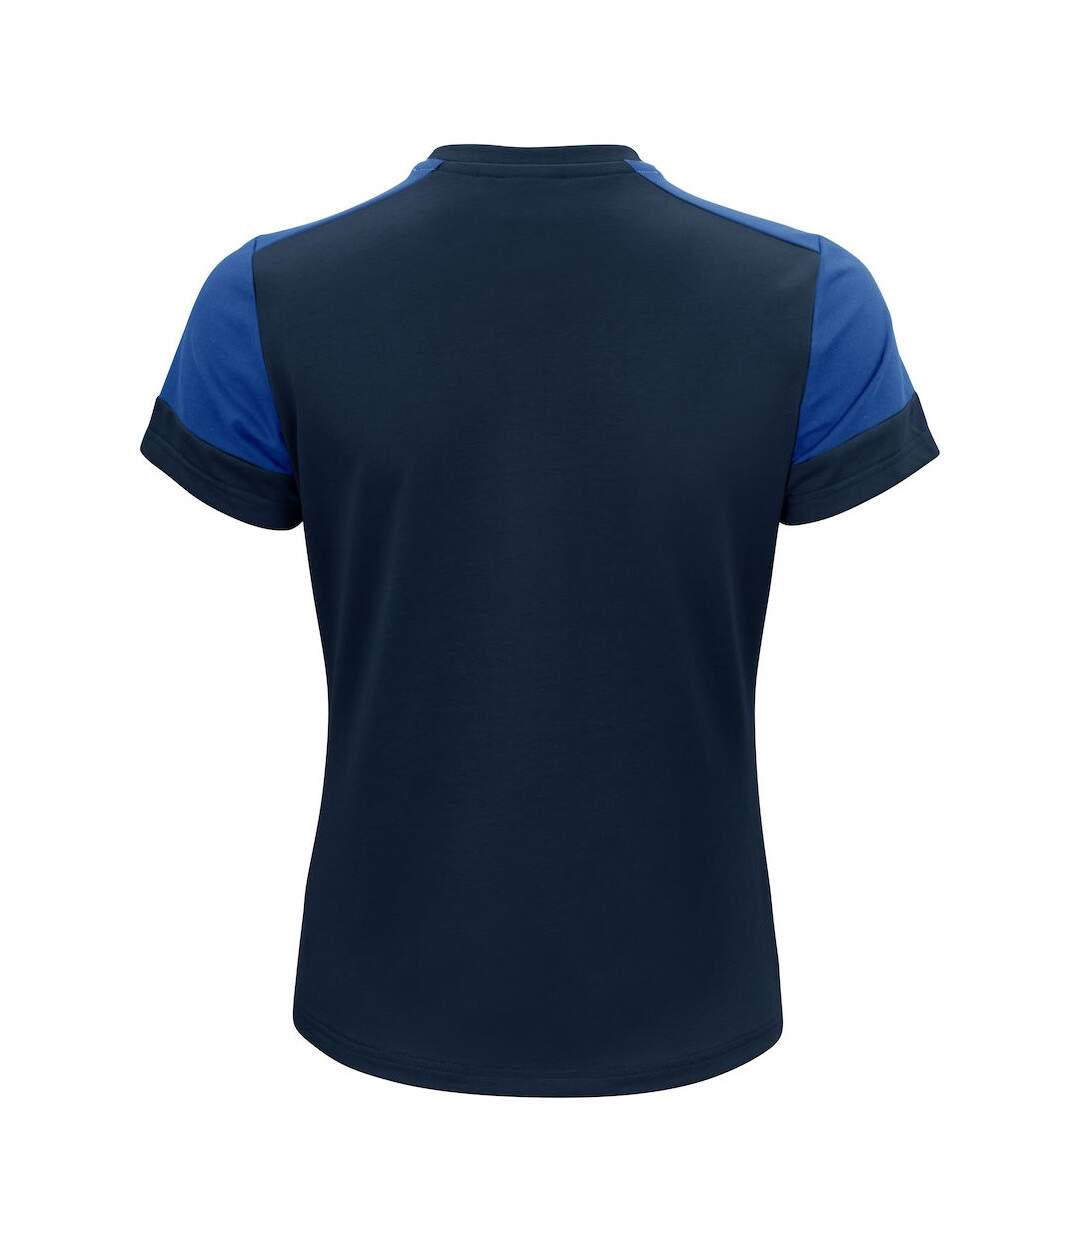 Printer PRIME Womens/Ladies T-Shirt (Navy/Cobalt Blue)